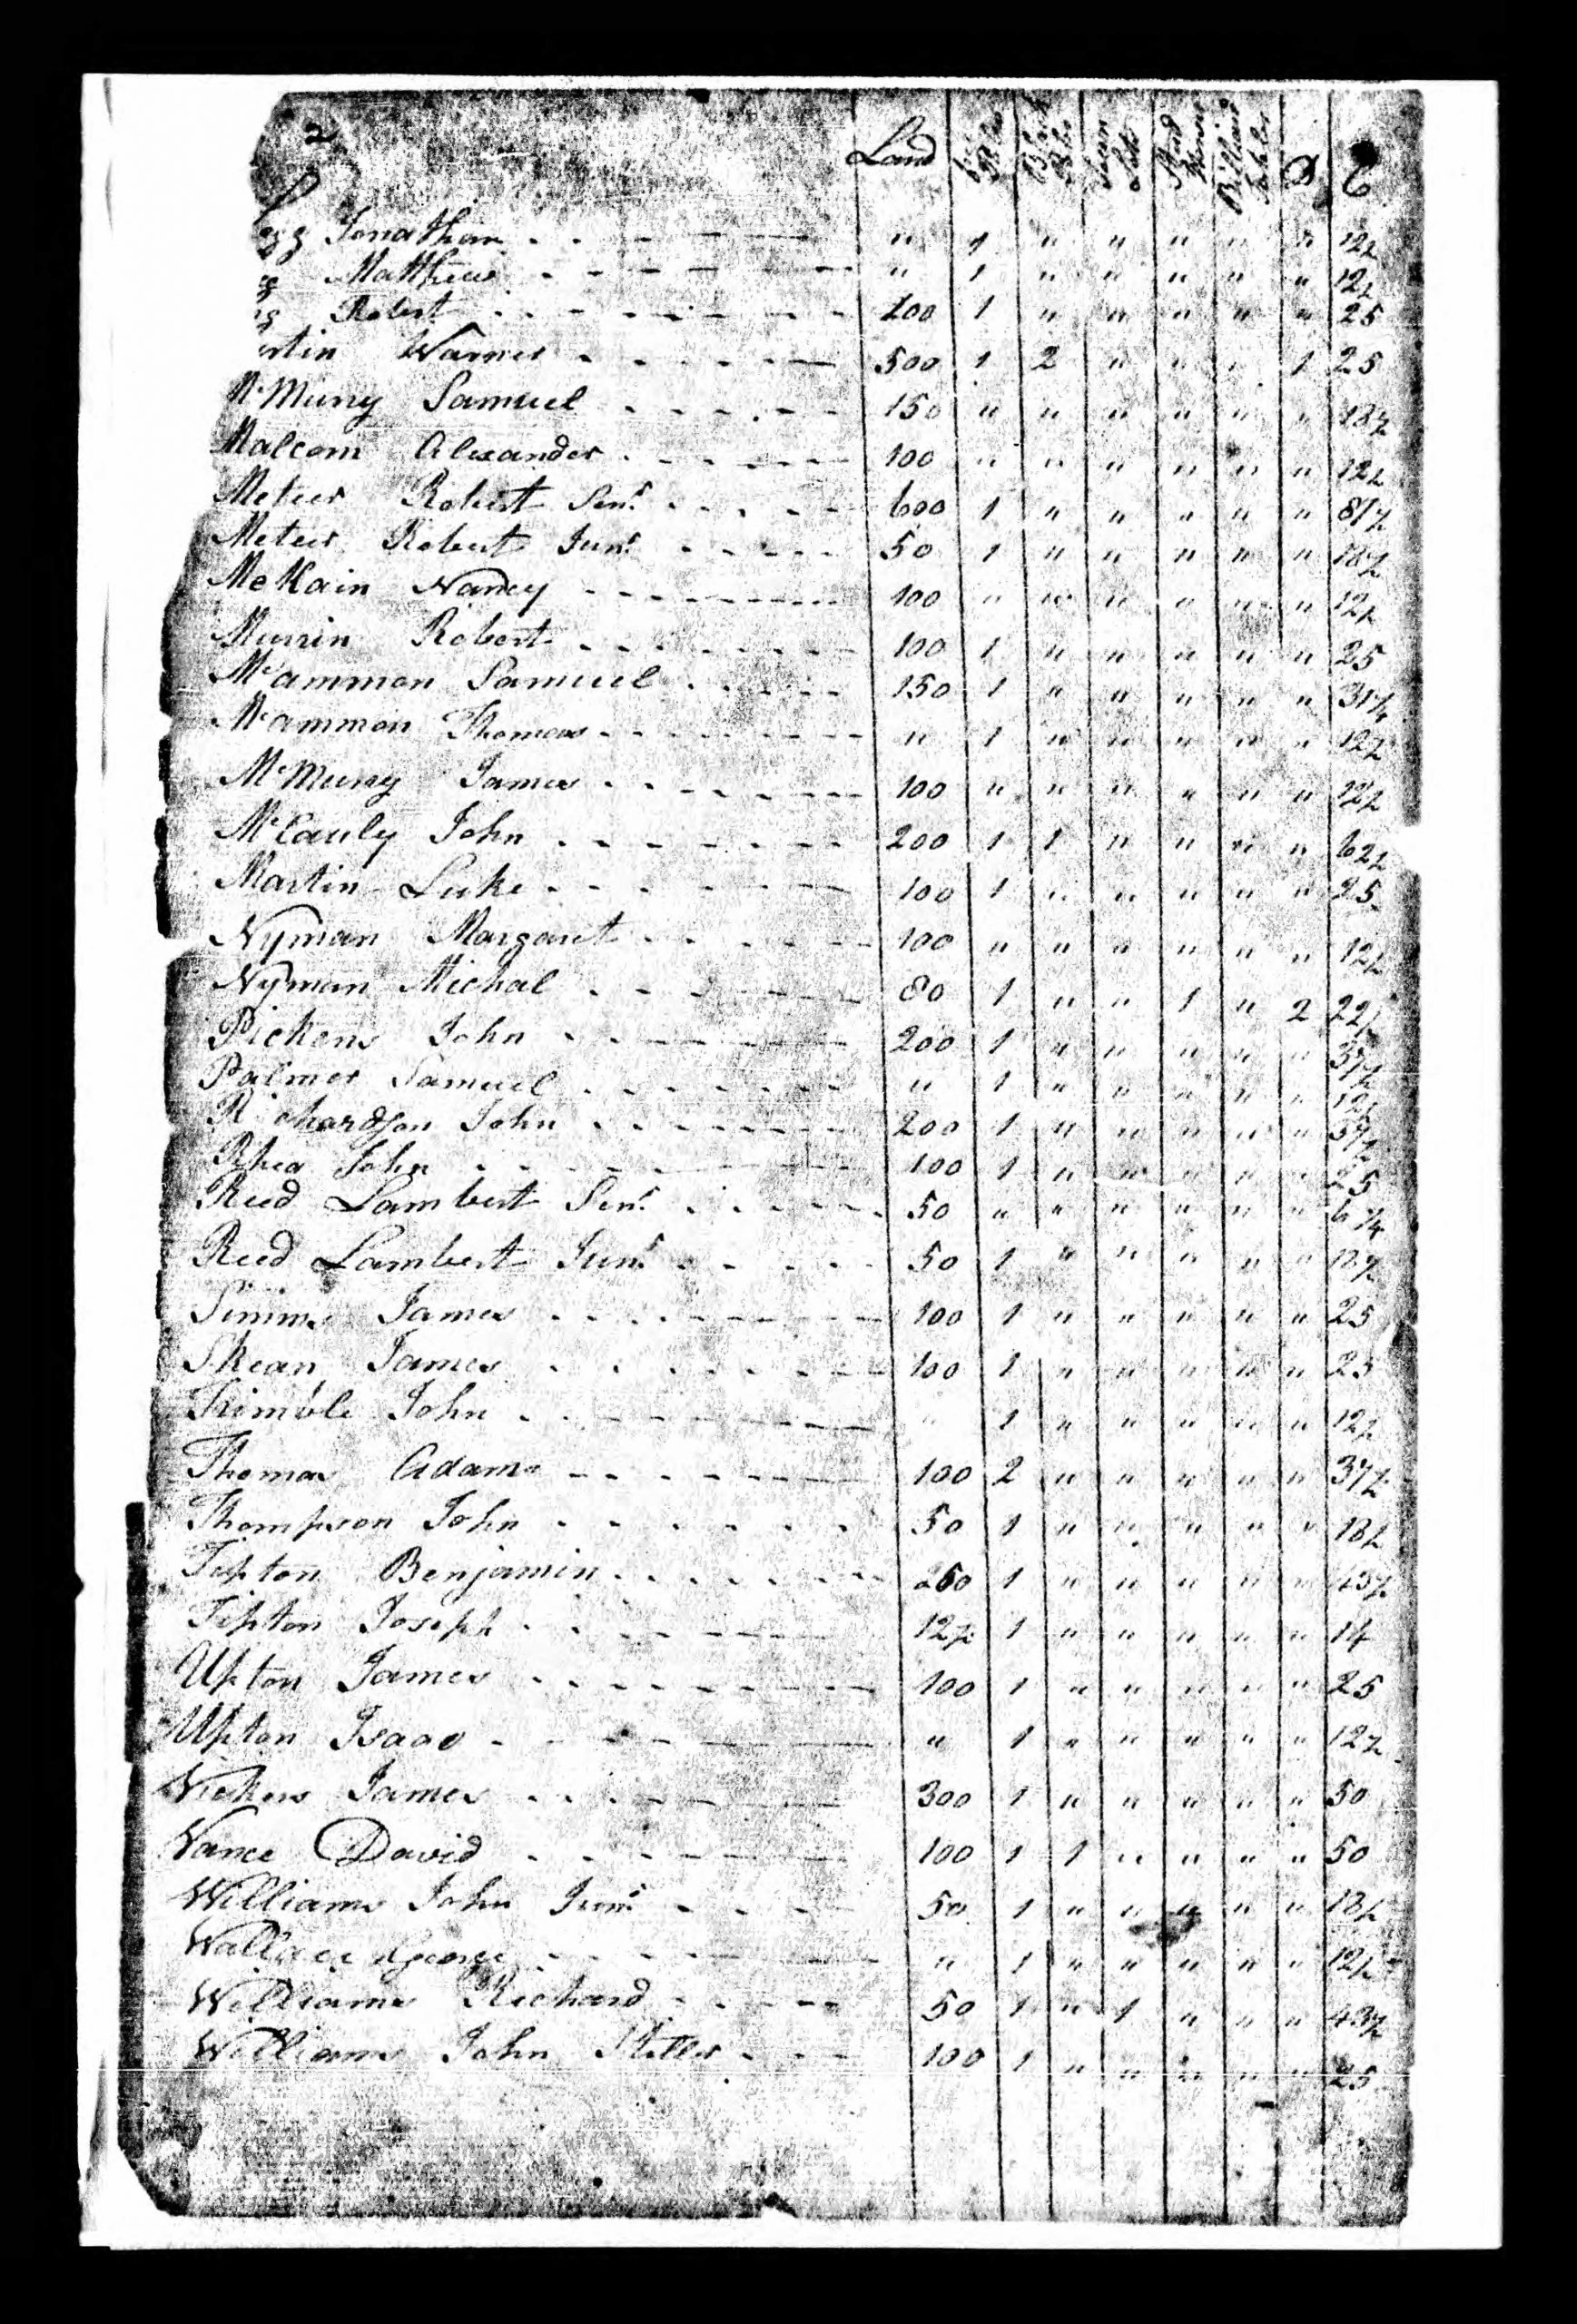 Blount County TN 1801 Tax List - Page 02